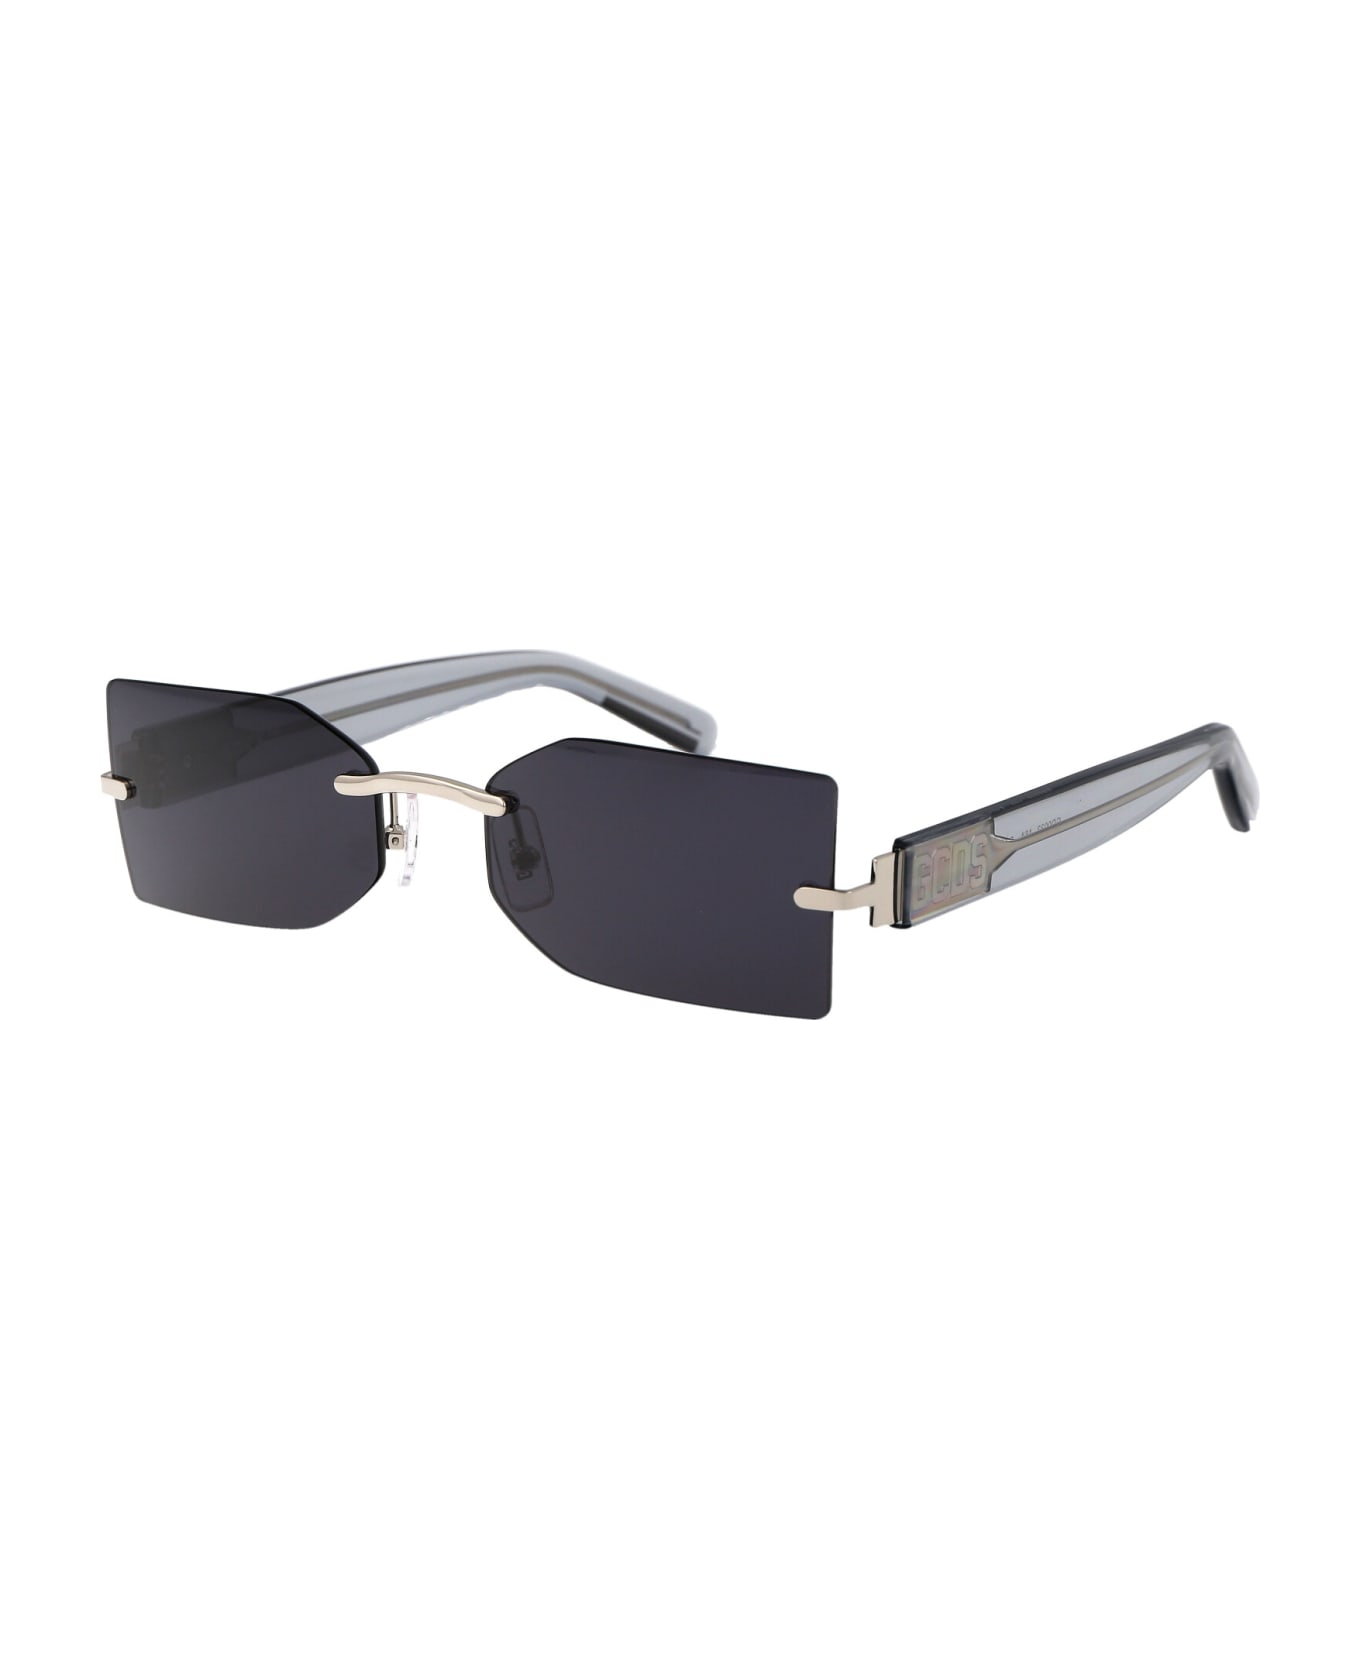 GCDS Gd0033 Sunglasses - 16A Palladio Luc/Fumo